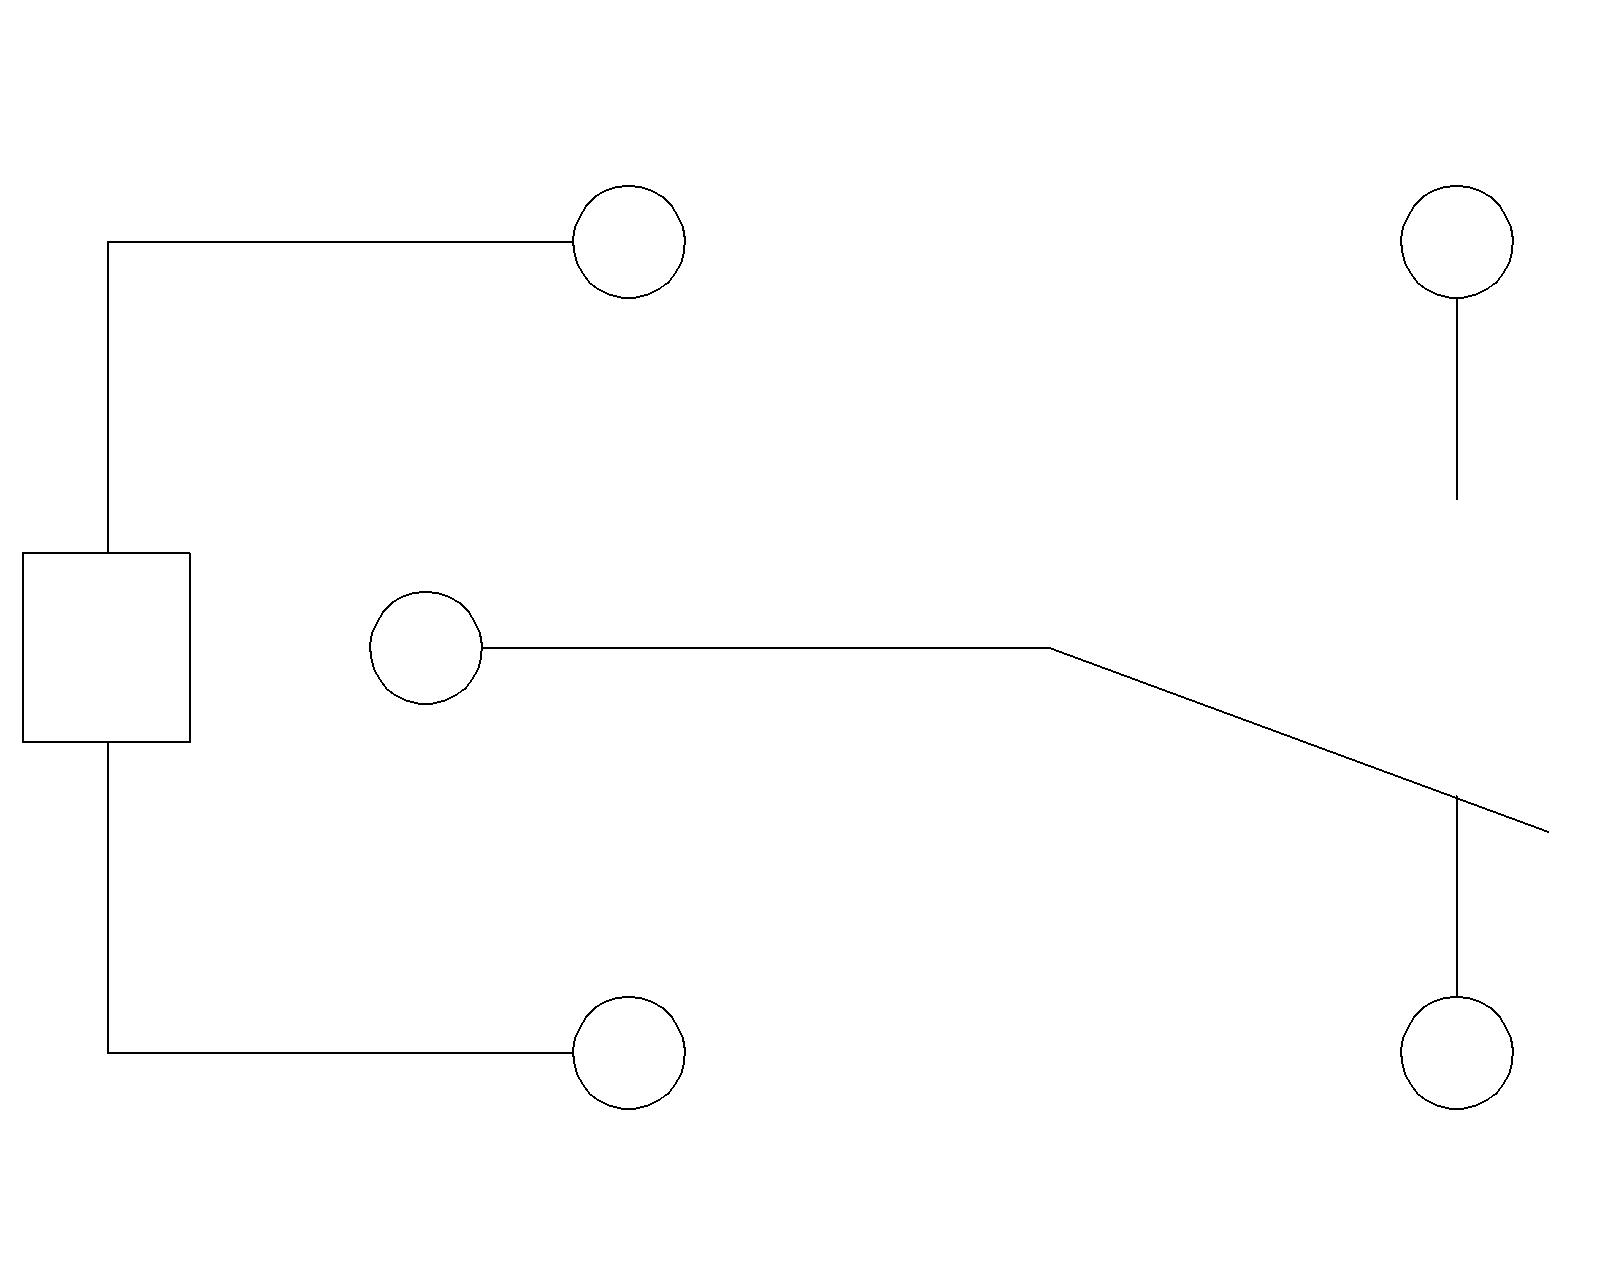 MQ8 wiring diagram